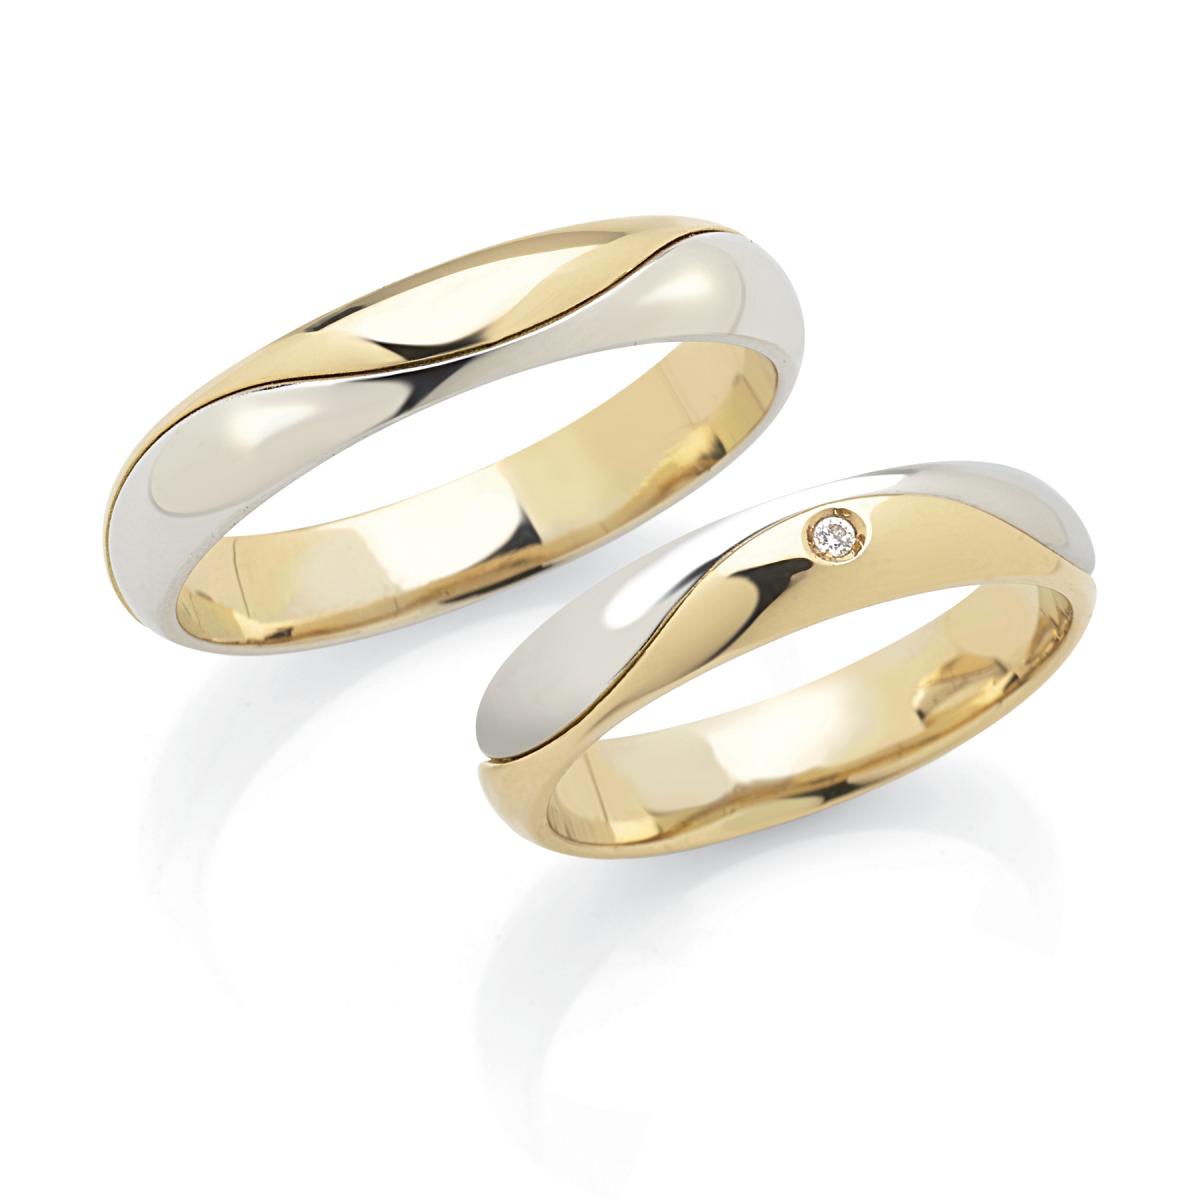 4.5 mm wide 18kt gold wedding ring - 565